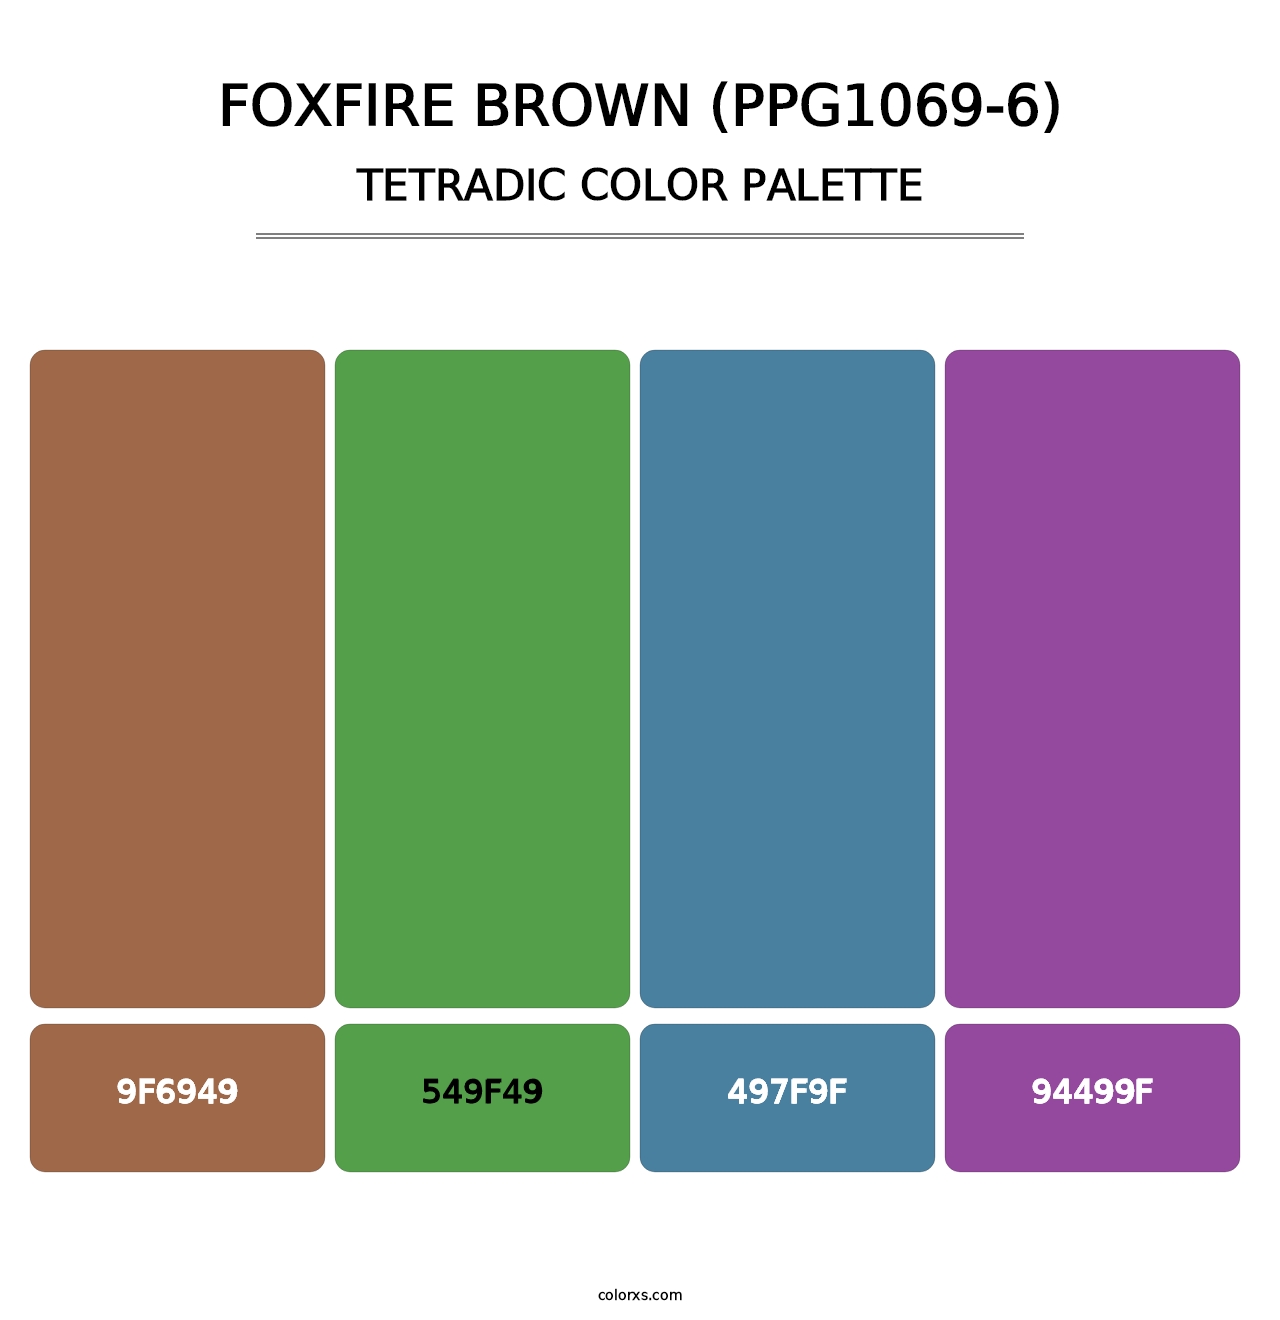 Foxfire Brown (PPG1069-6) - Tetradic Color Palette